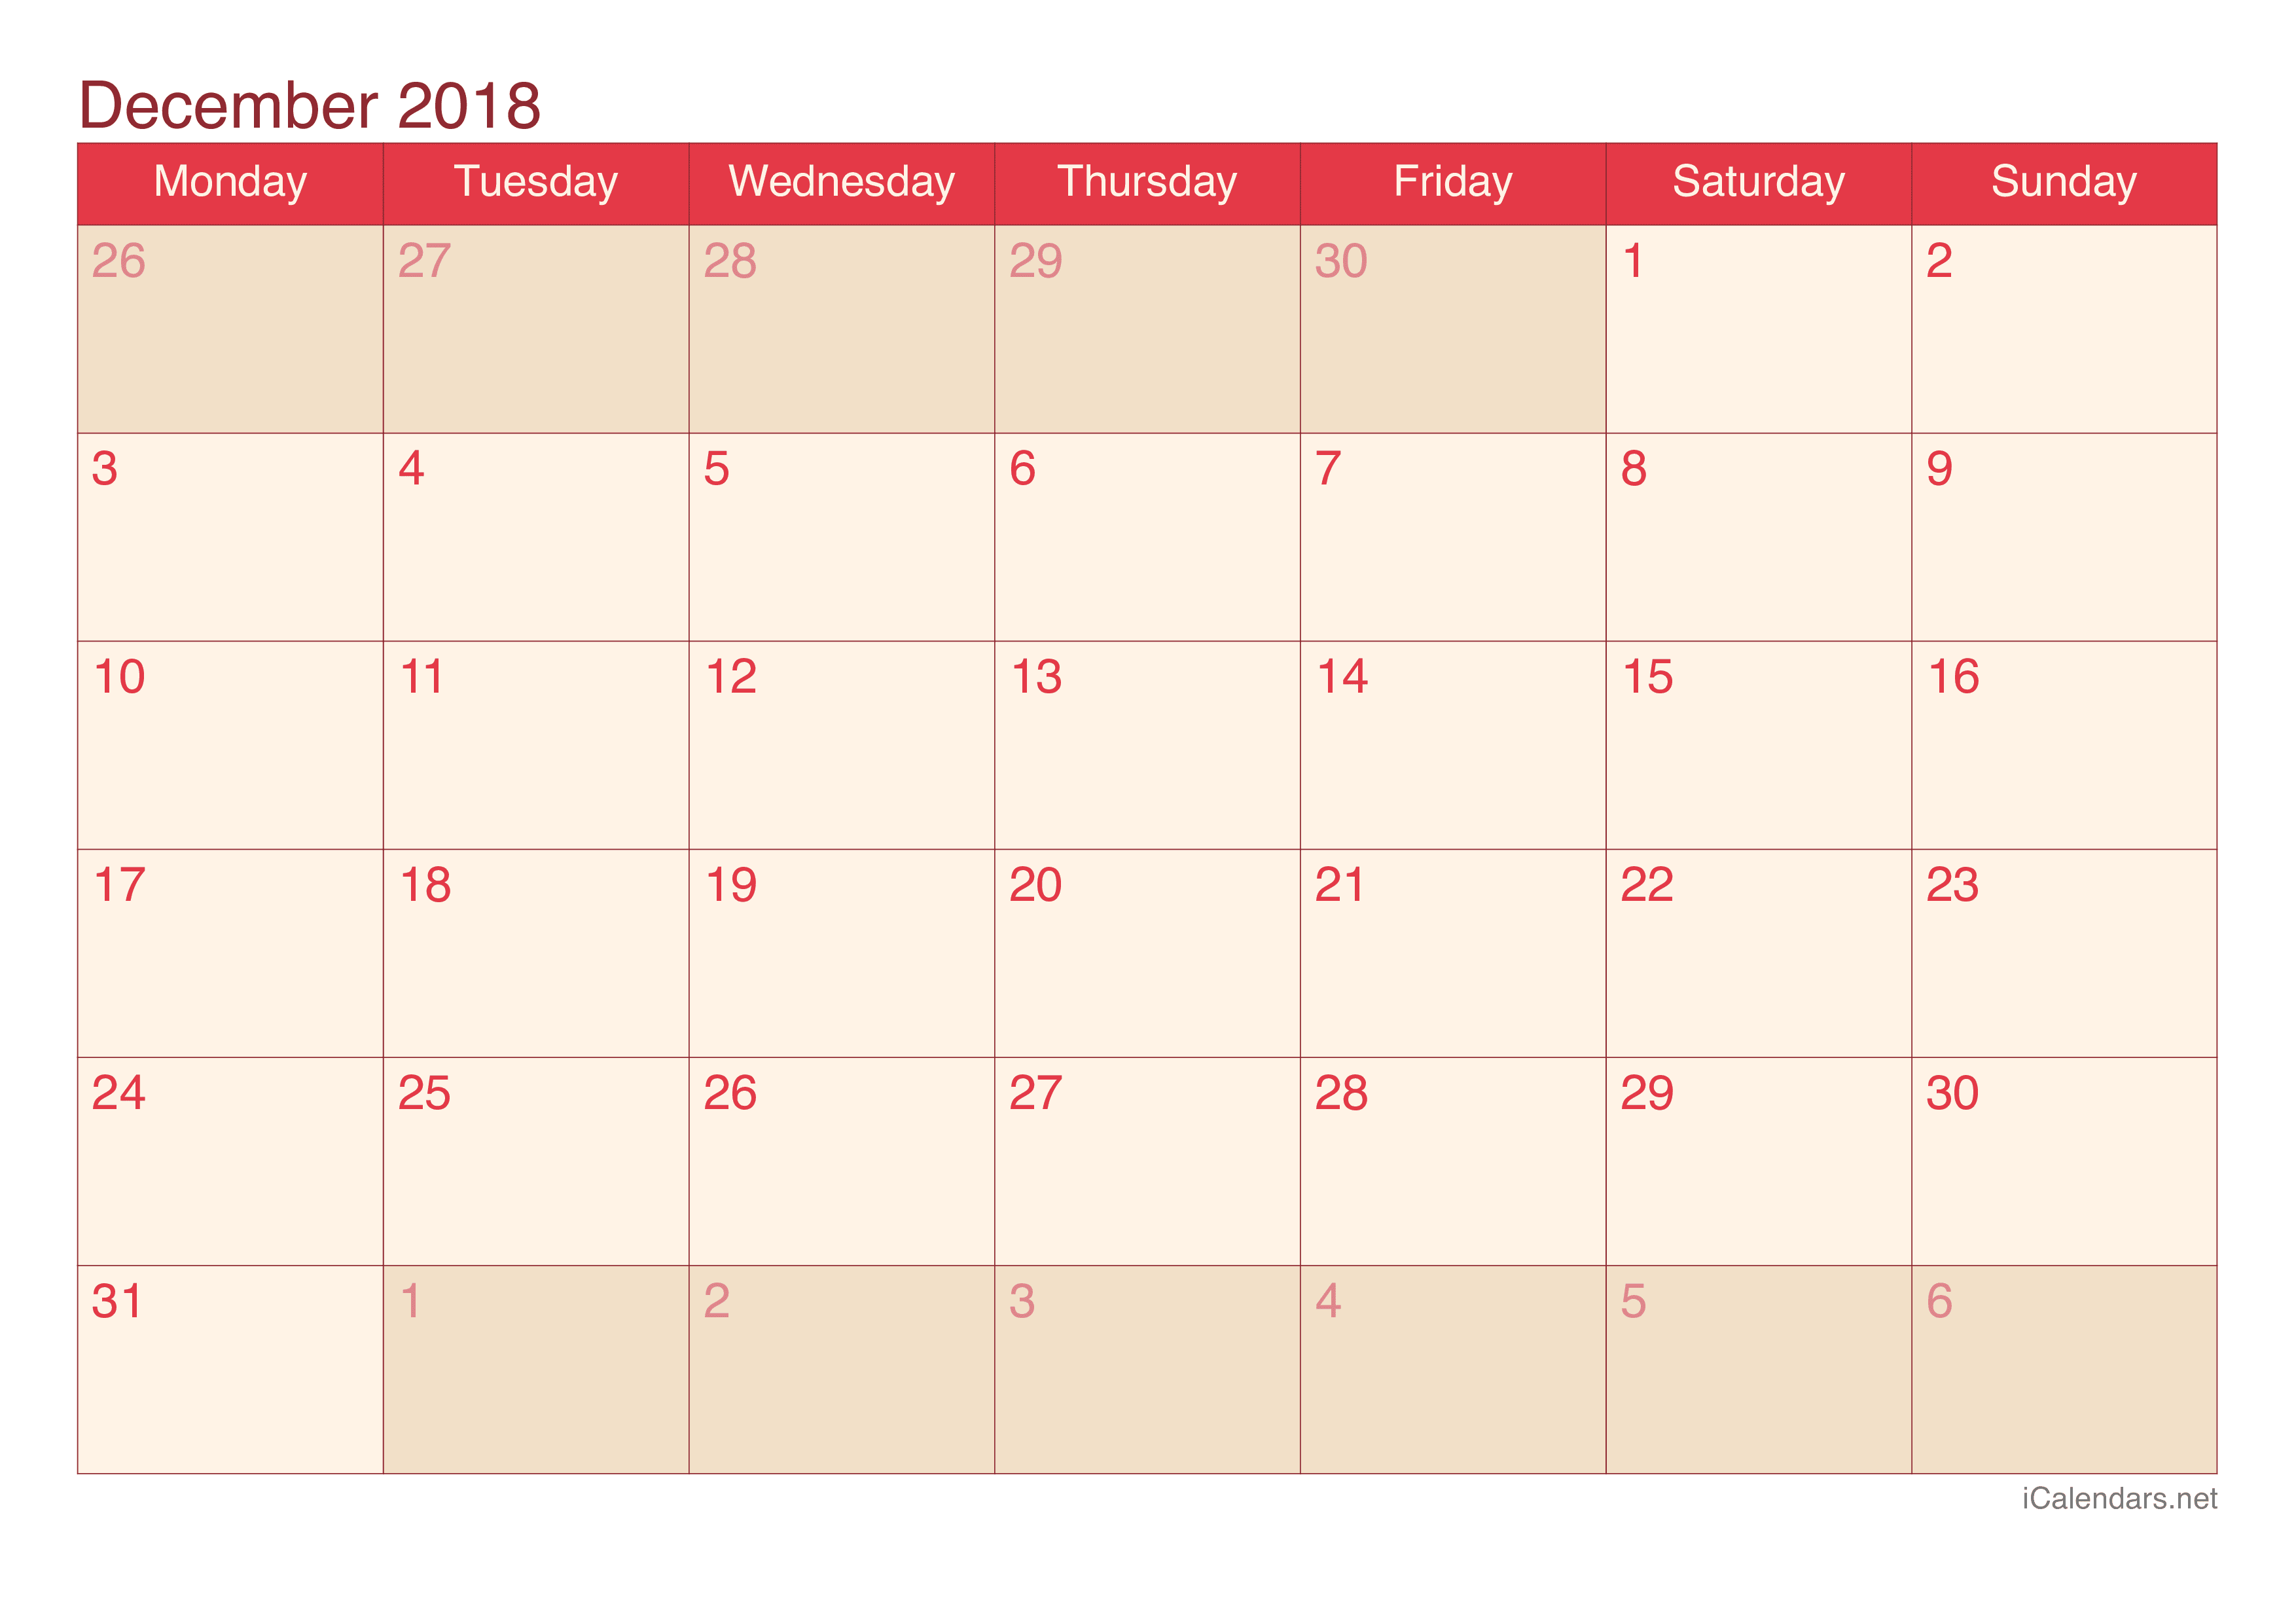 December 2018 Printable Calendar icalendars net